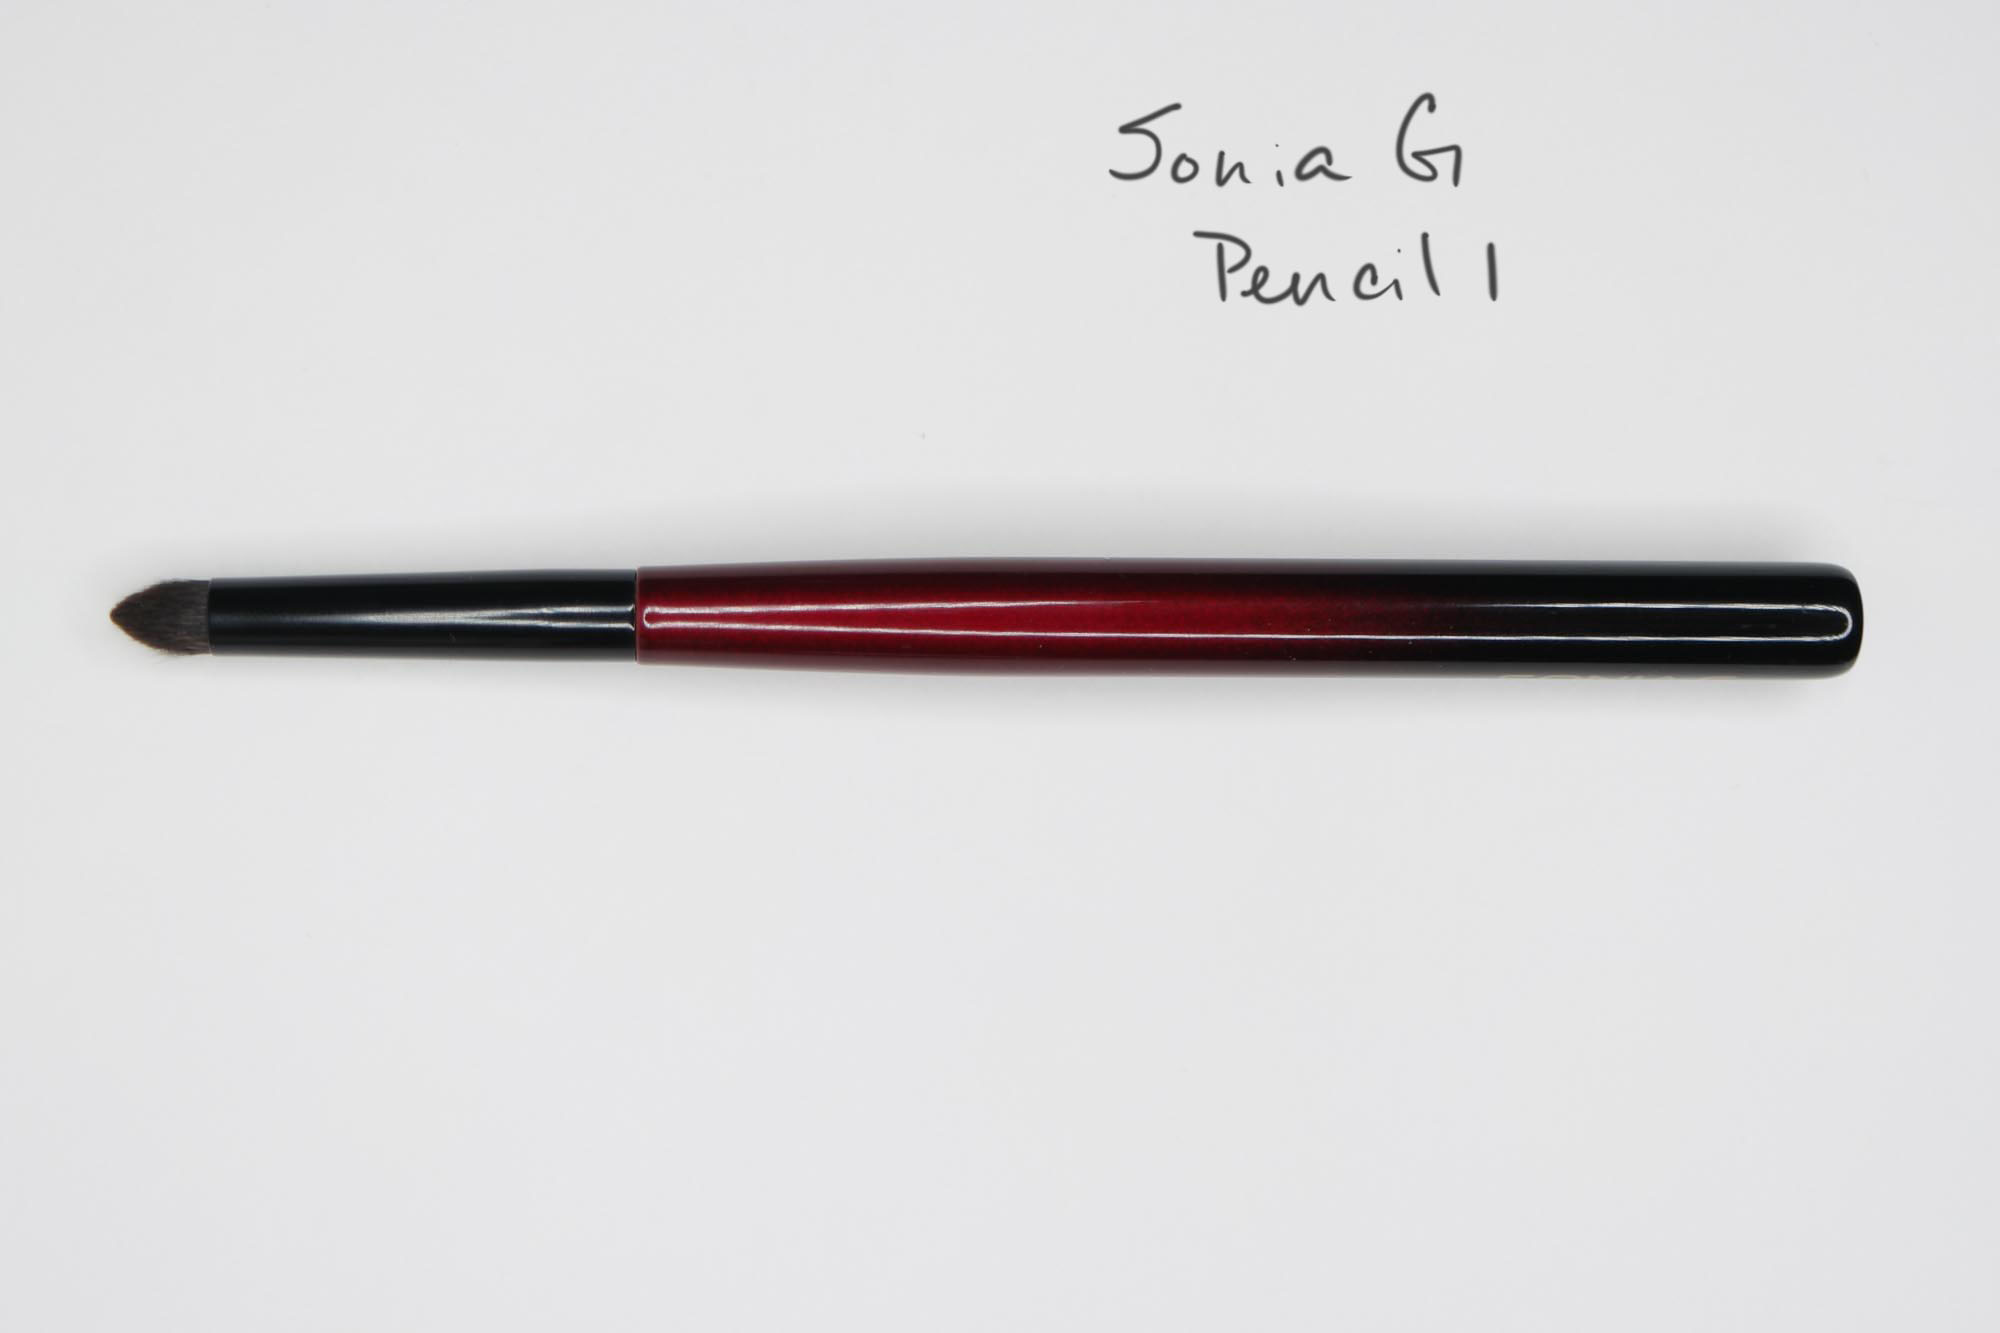 Sonia G Pencil 1